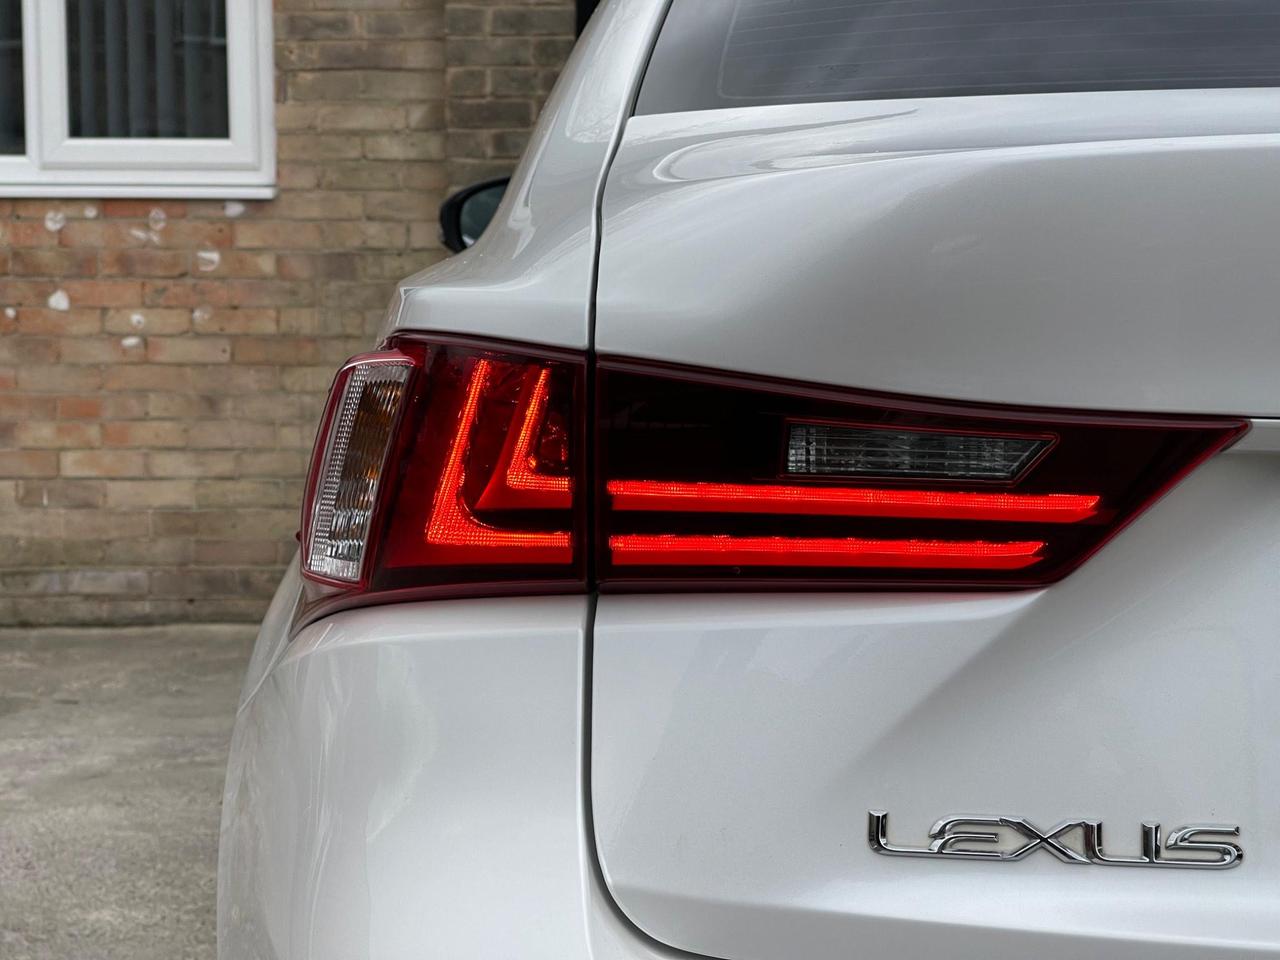 Used 2016 Lexus IS for sale in Sheffield